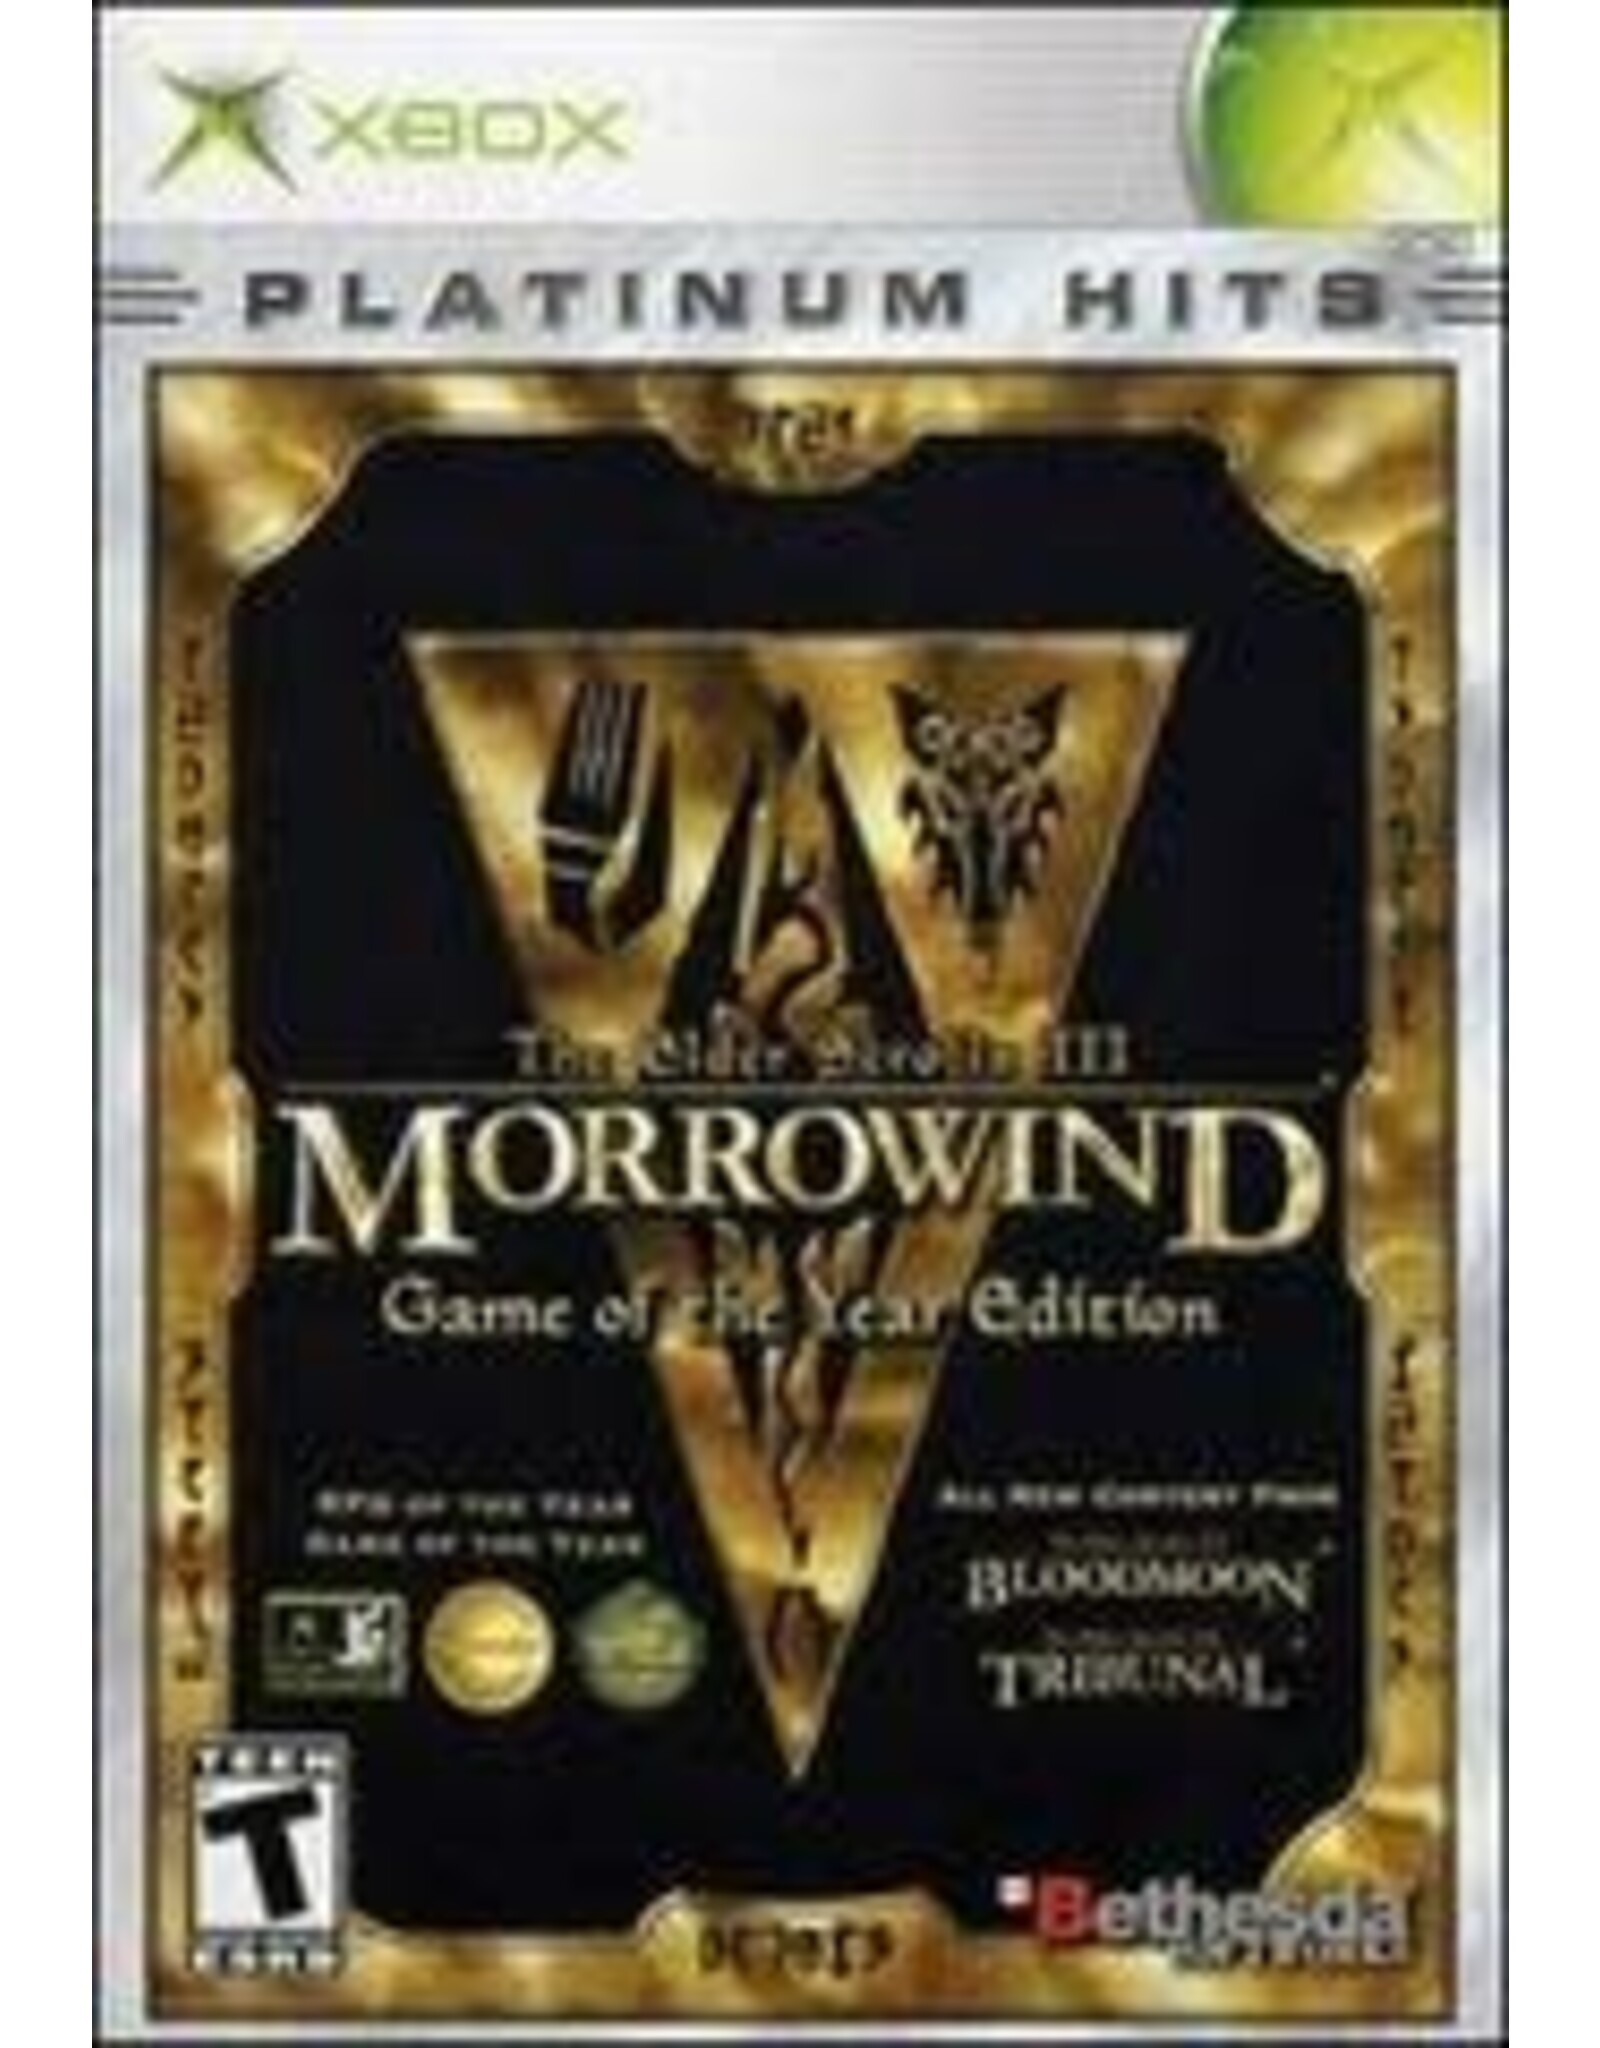 Xbox Morrowind Game Of The Year, Elder Scrolls III - Platinum Hits (Used, Cosmetic Damage)